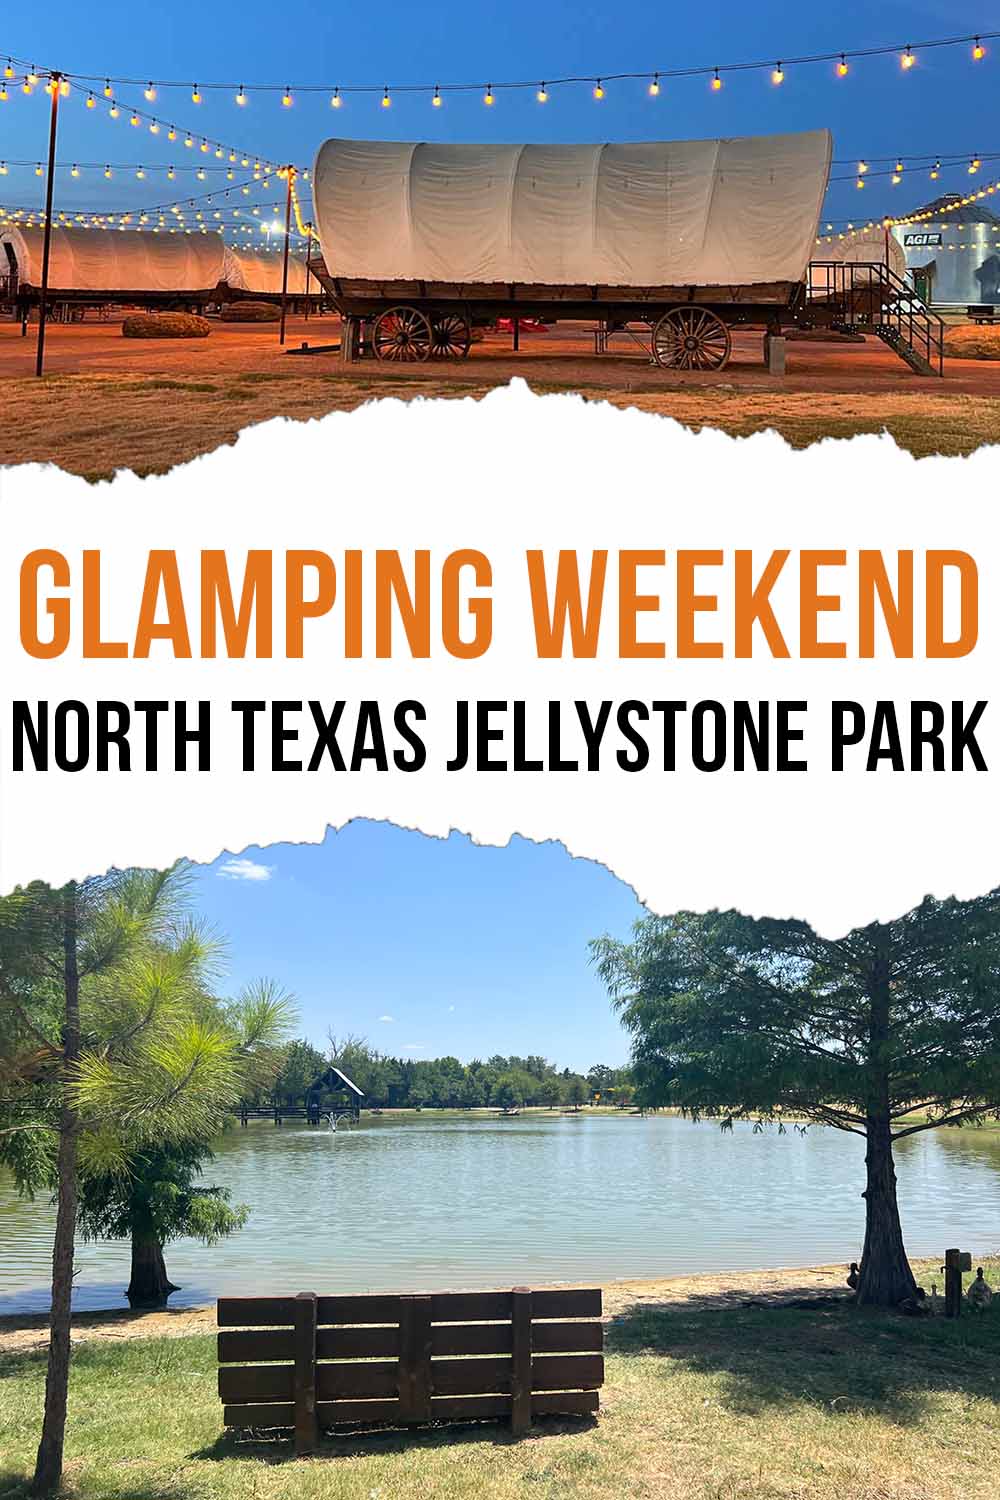 North Texas Jellystone Park